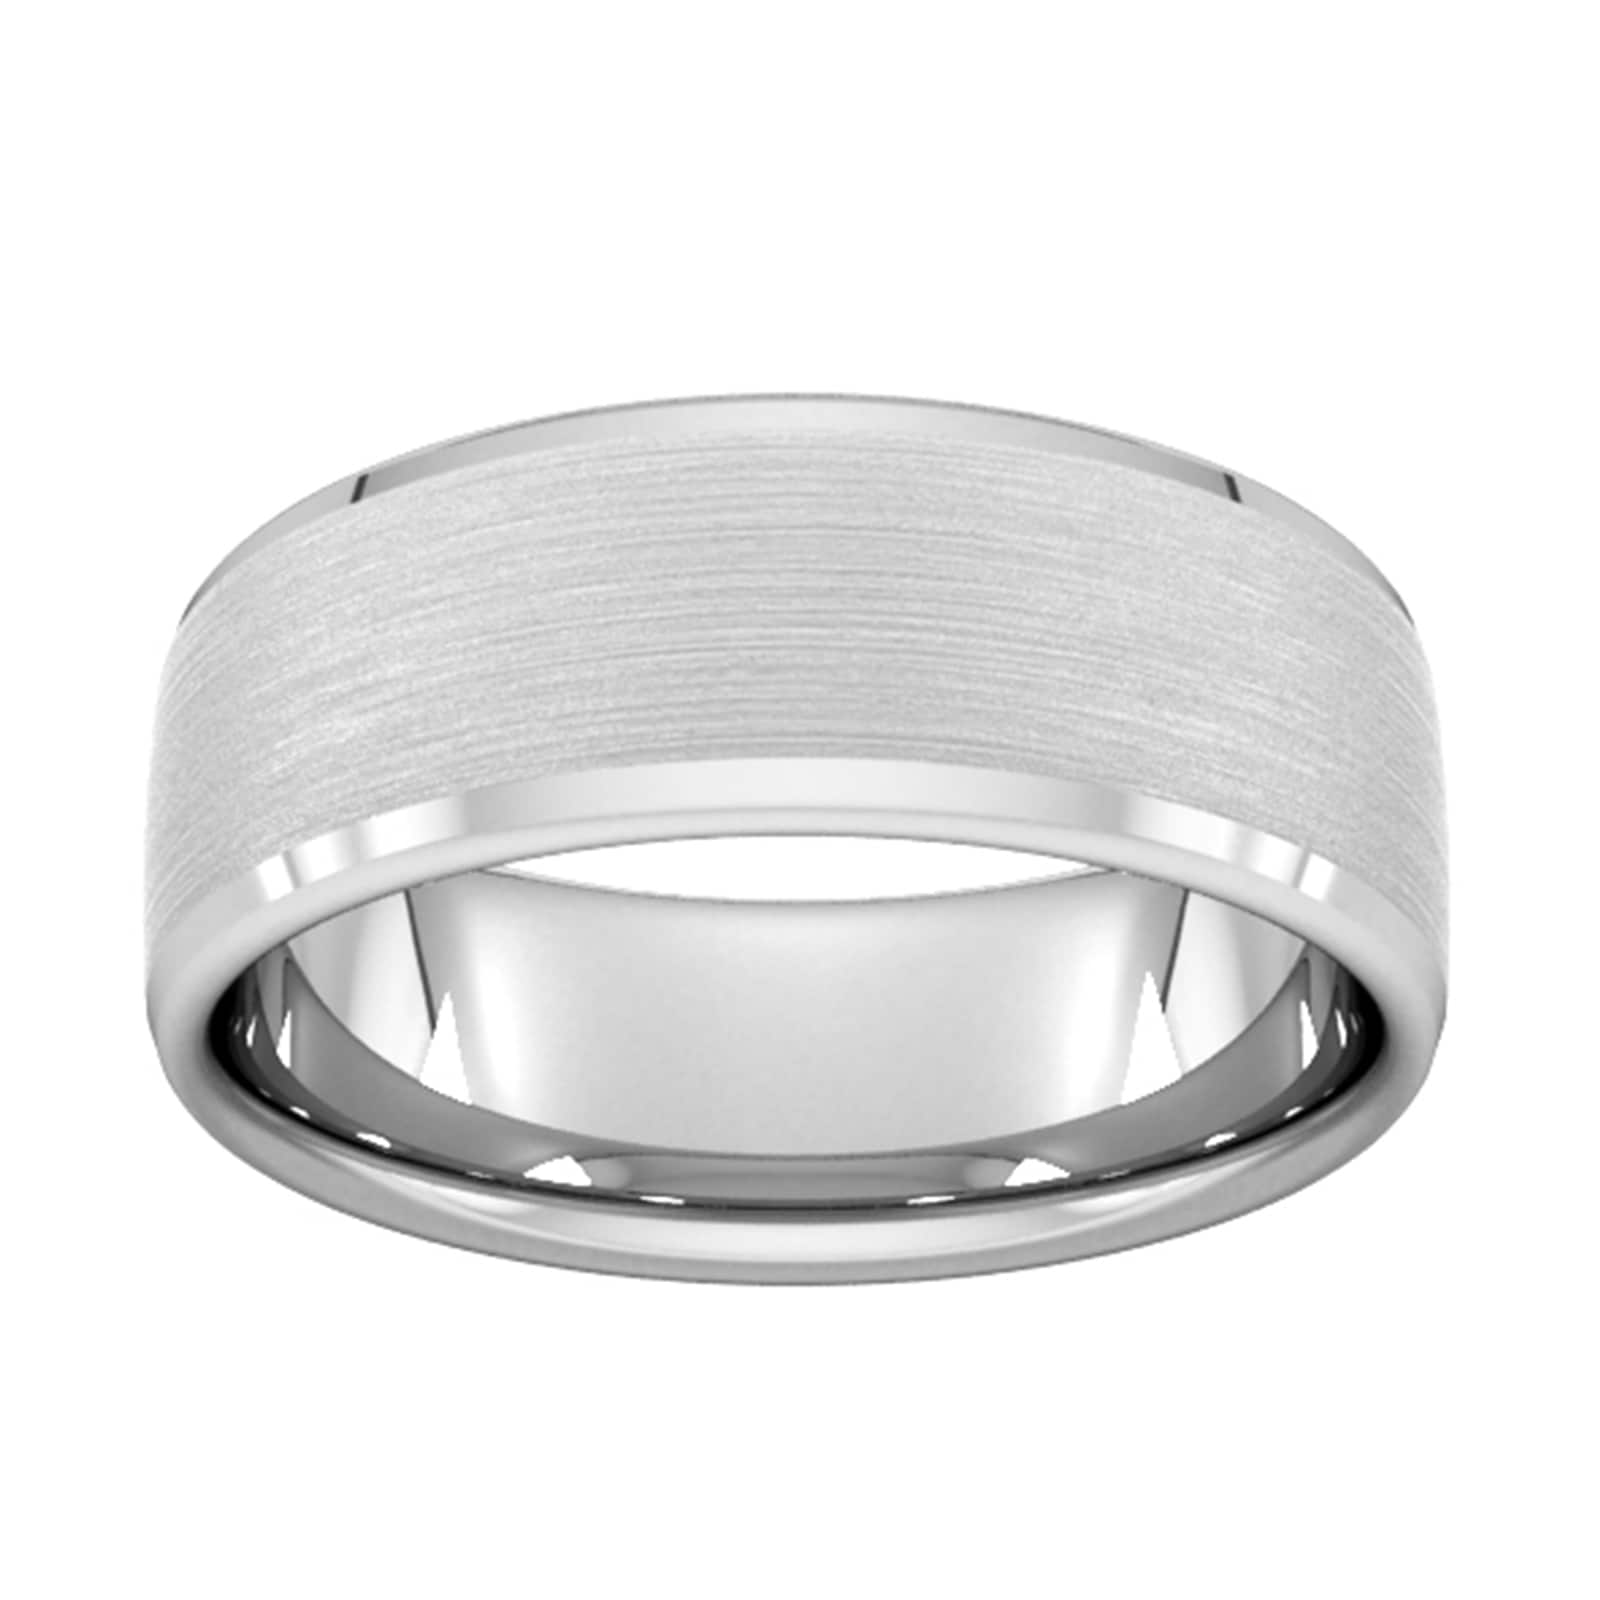 8mm Slight Court Standard Polished Chamfered Edges With Matt Centre Wedding Ring In 950 Palladium - Ring Size J